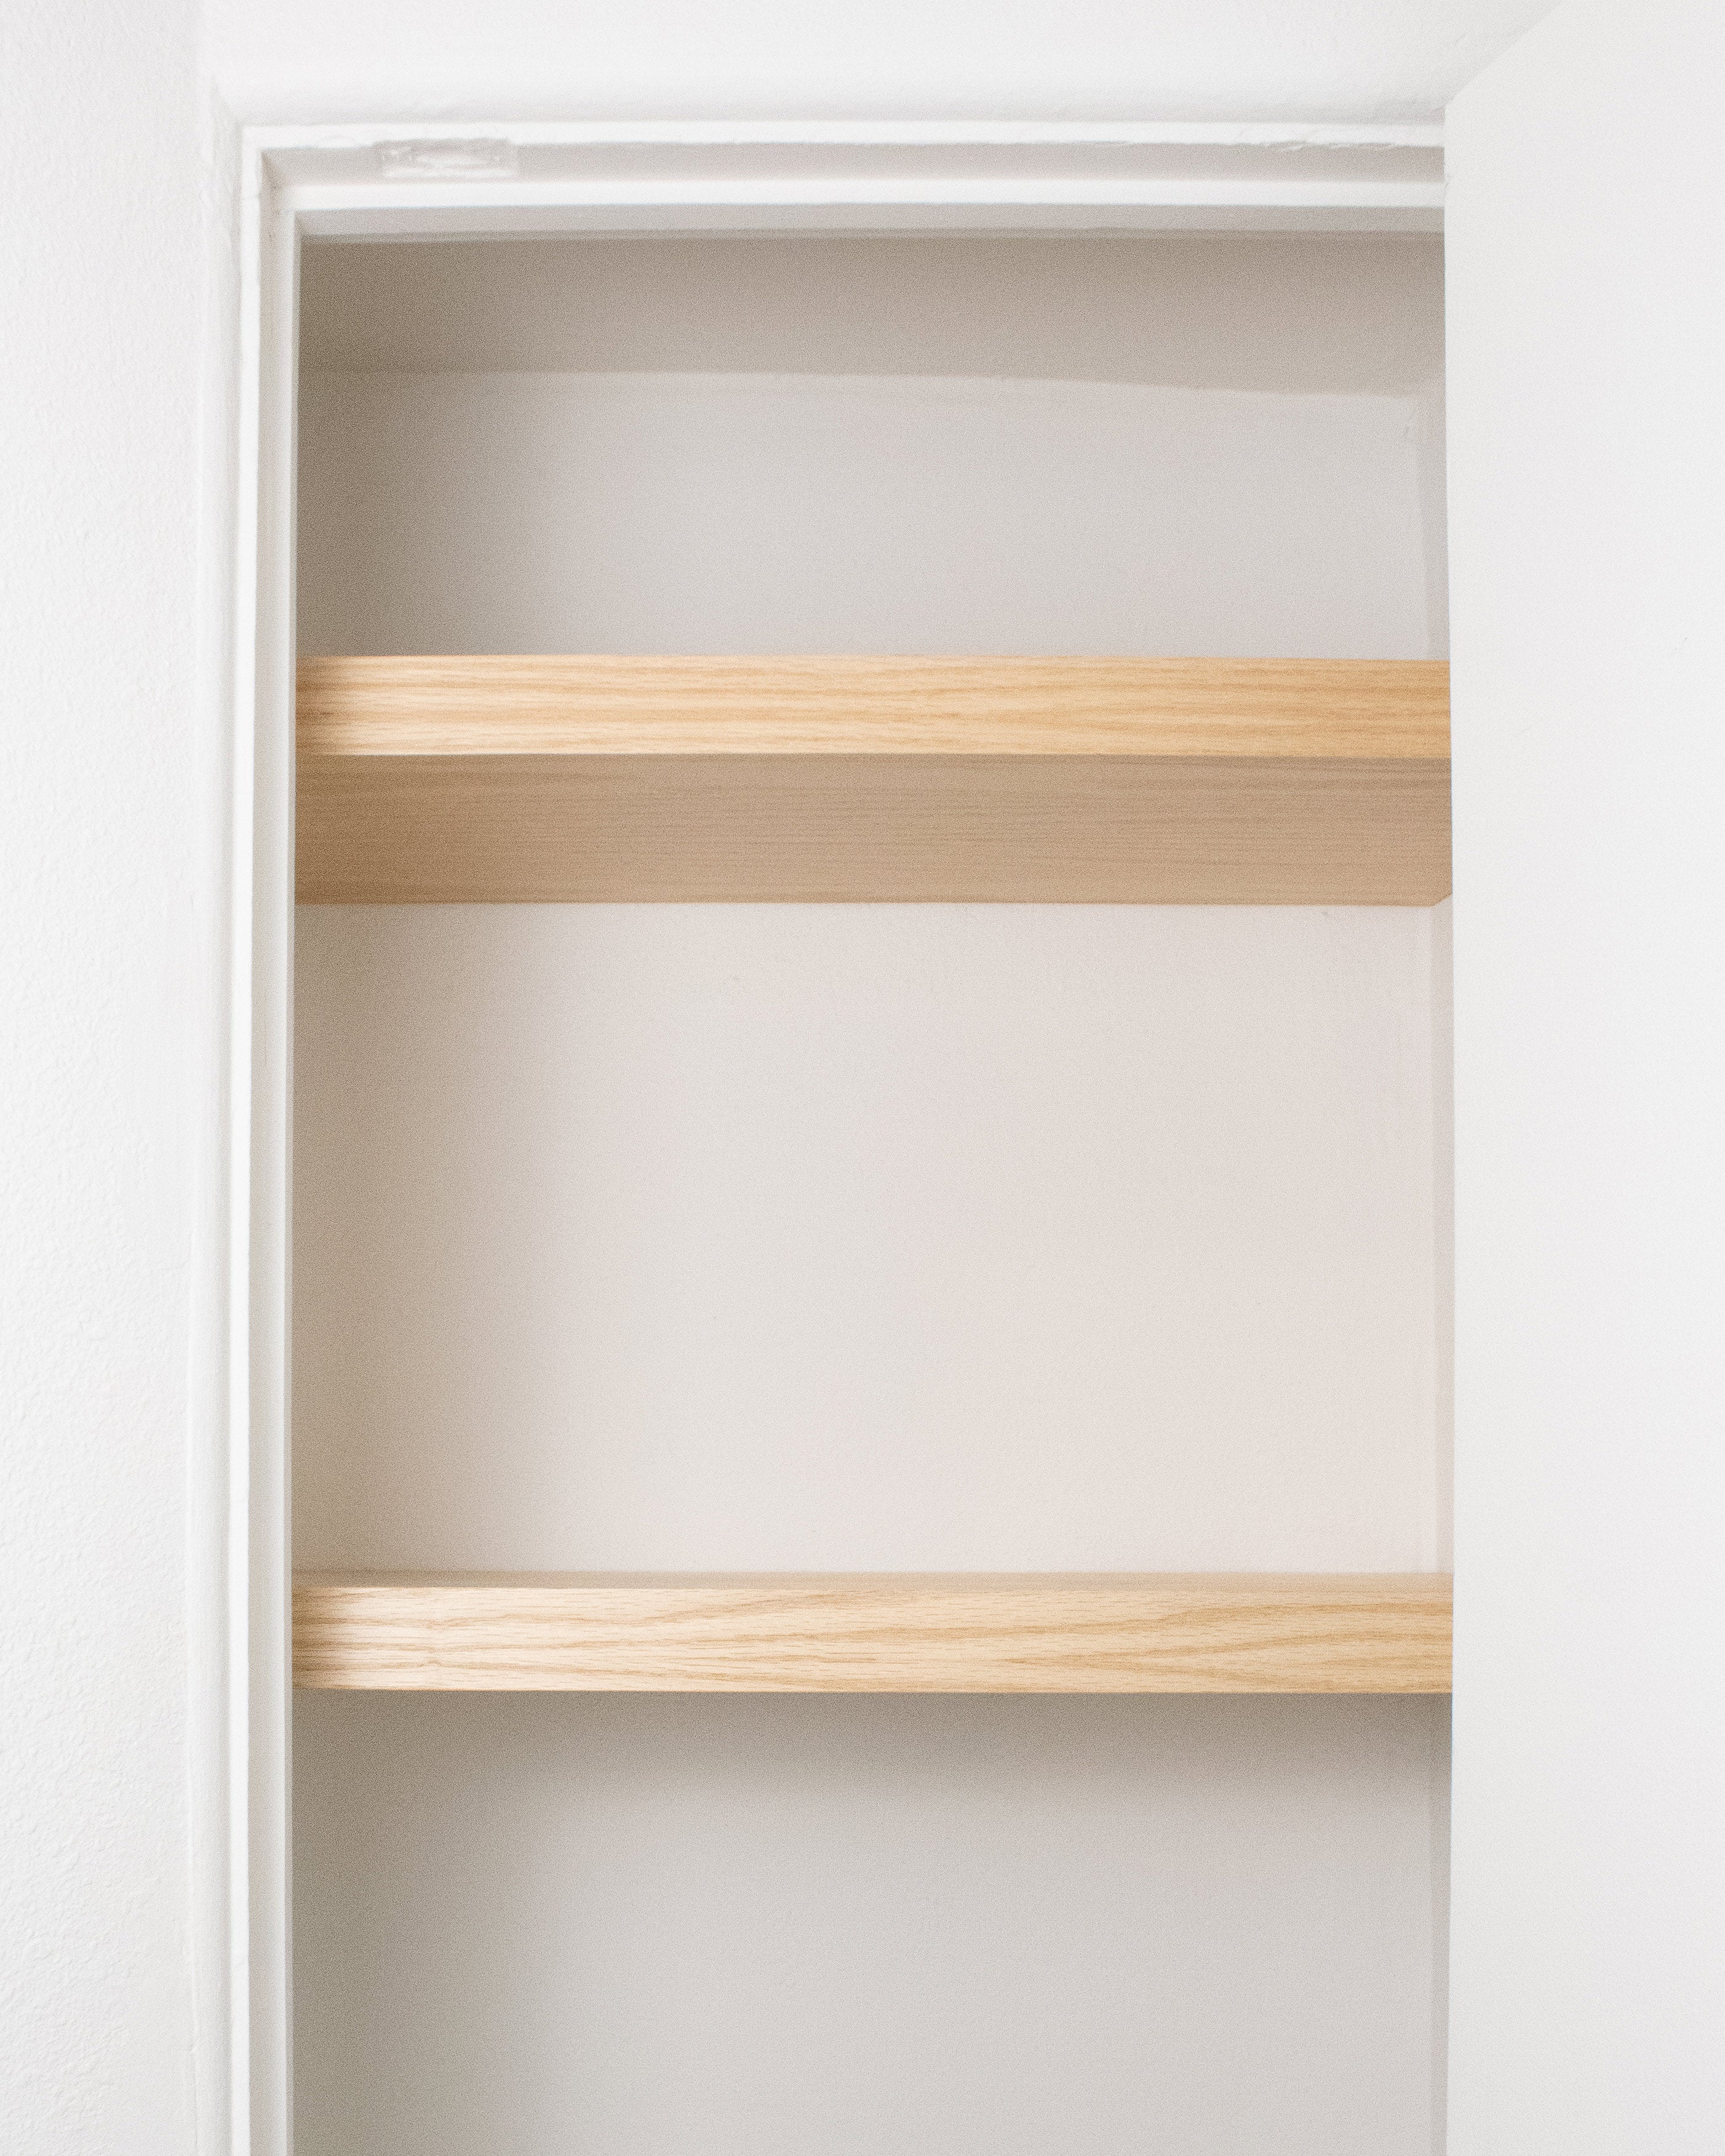 Walnut 4.1-6" thick Cabinet Top / Slab Shelf